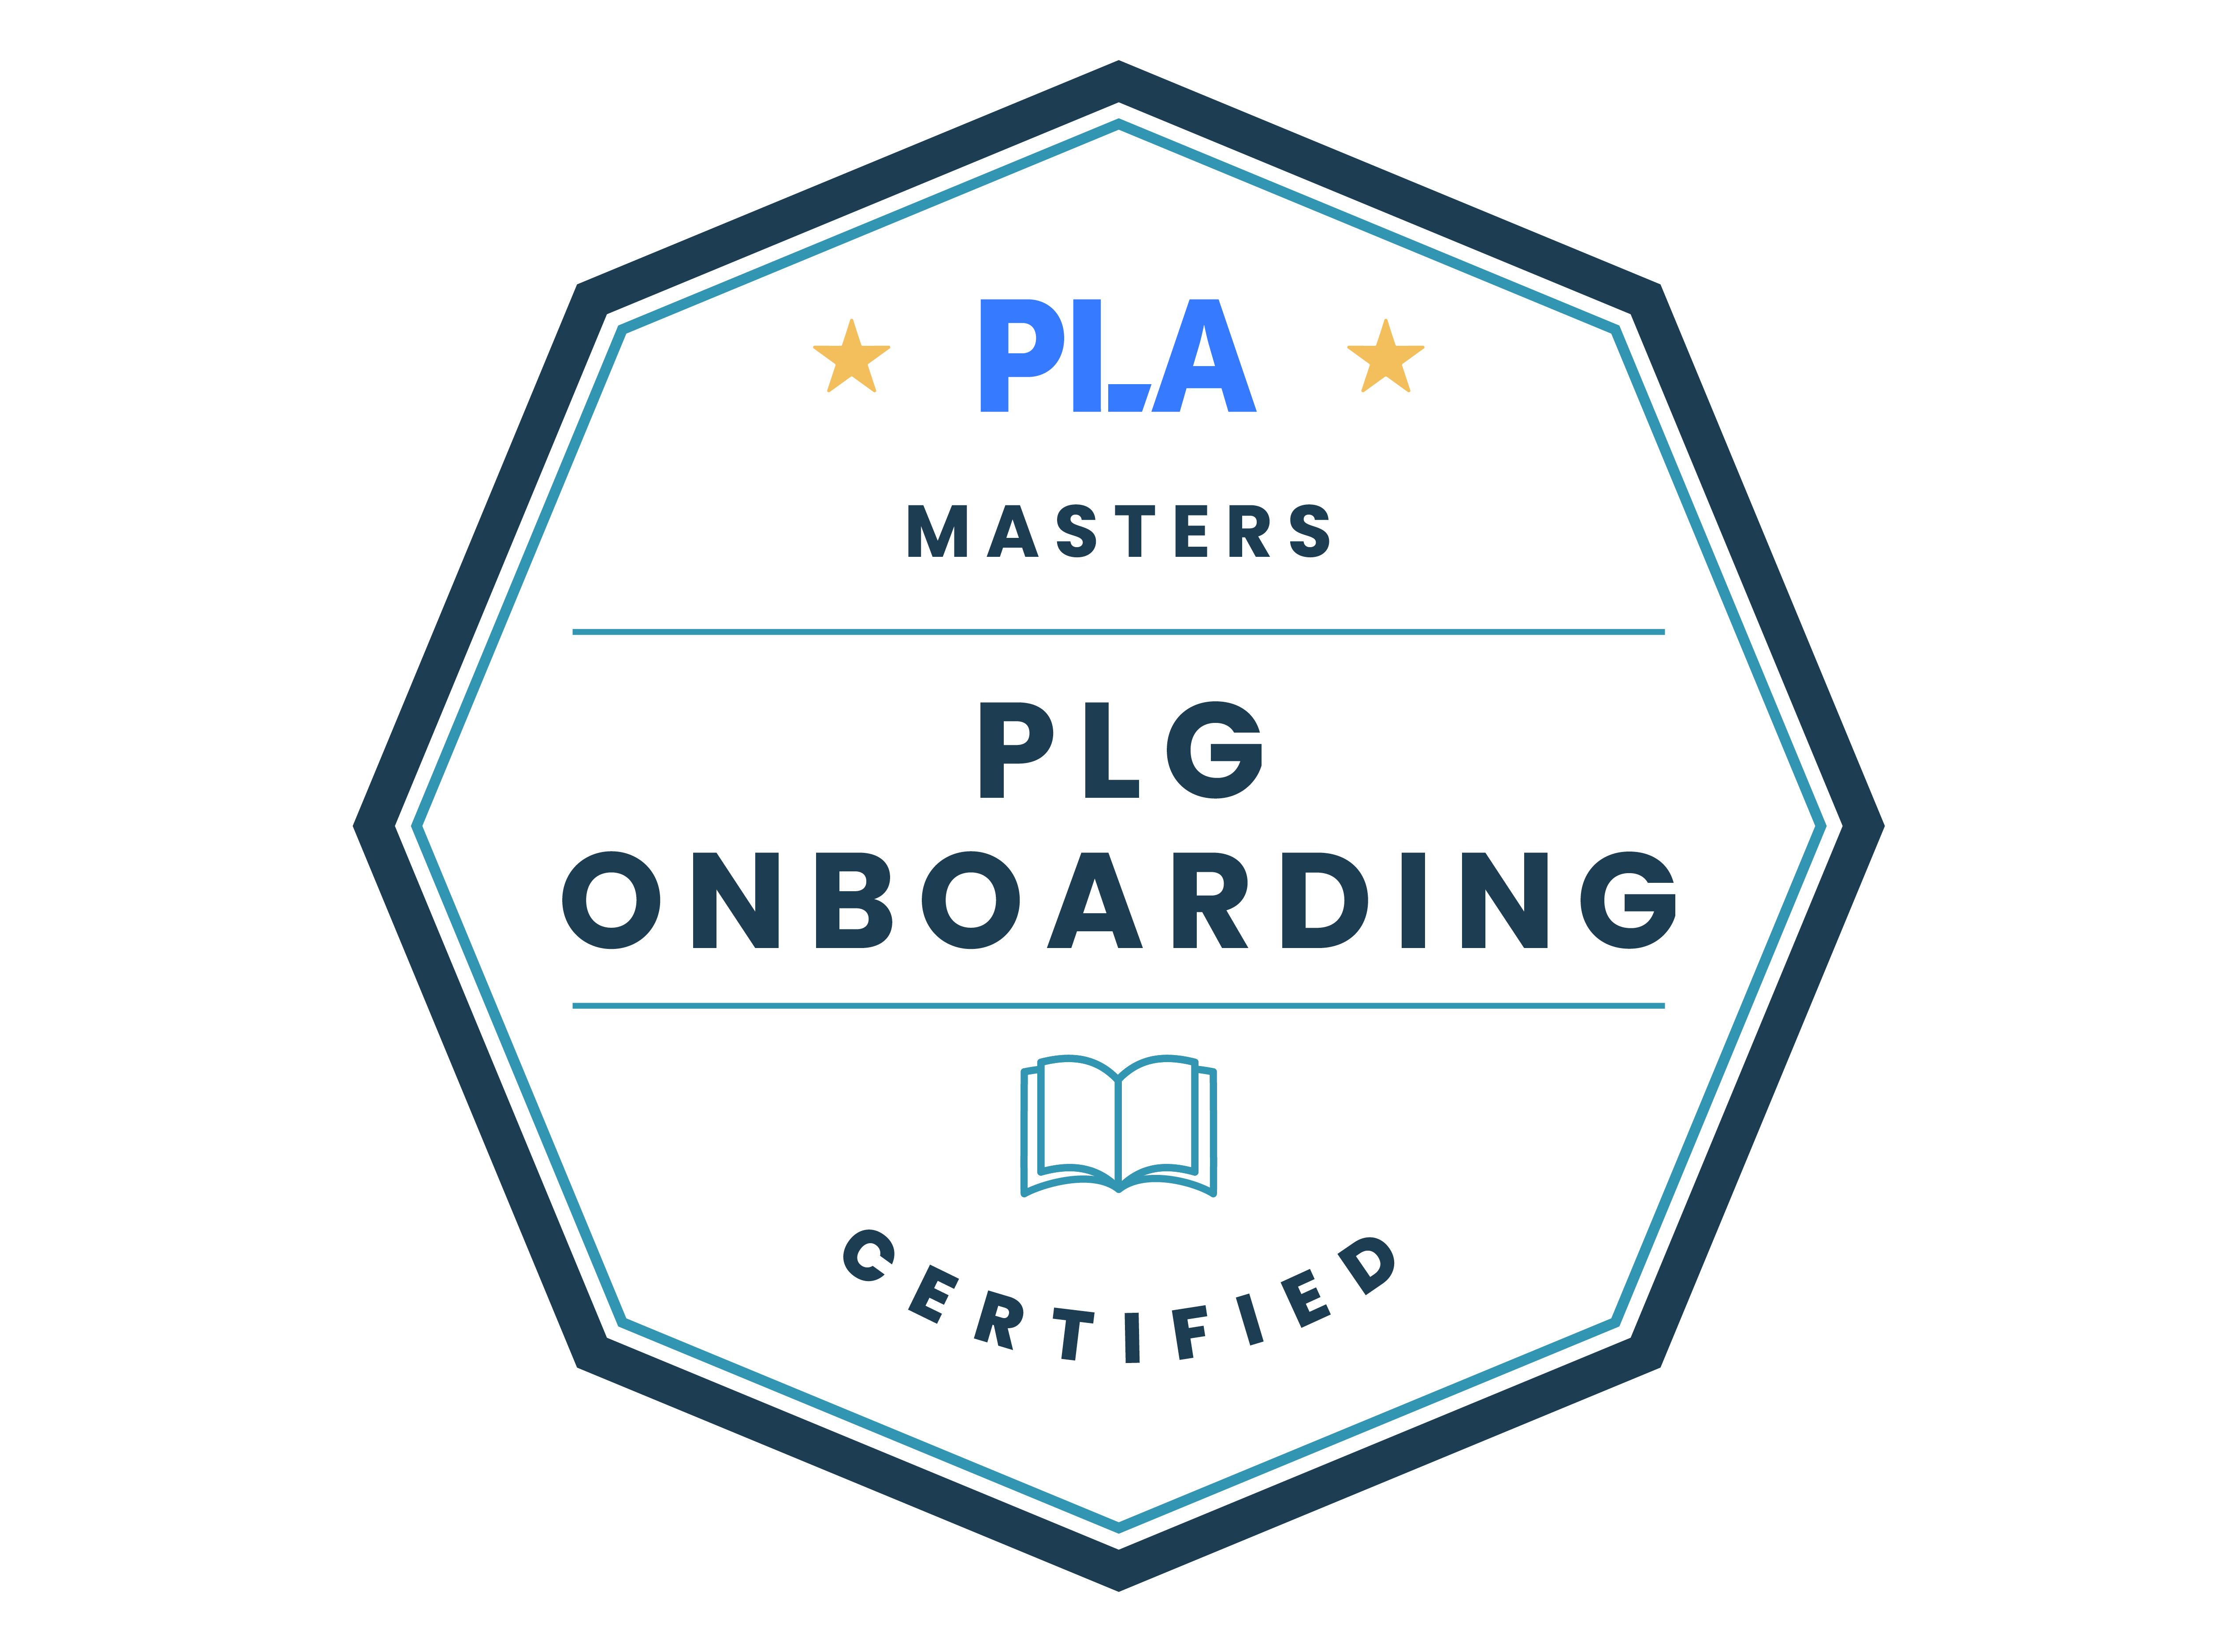 PLG Onboarding Certified badge